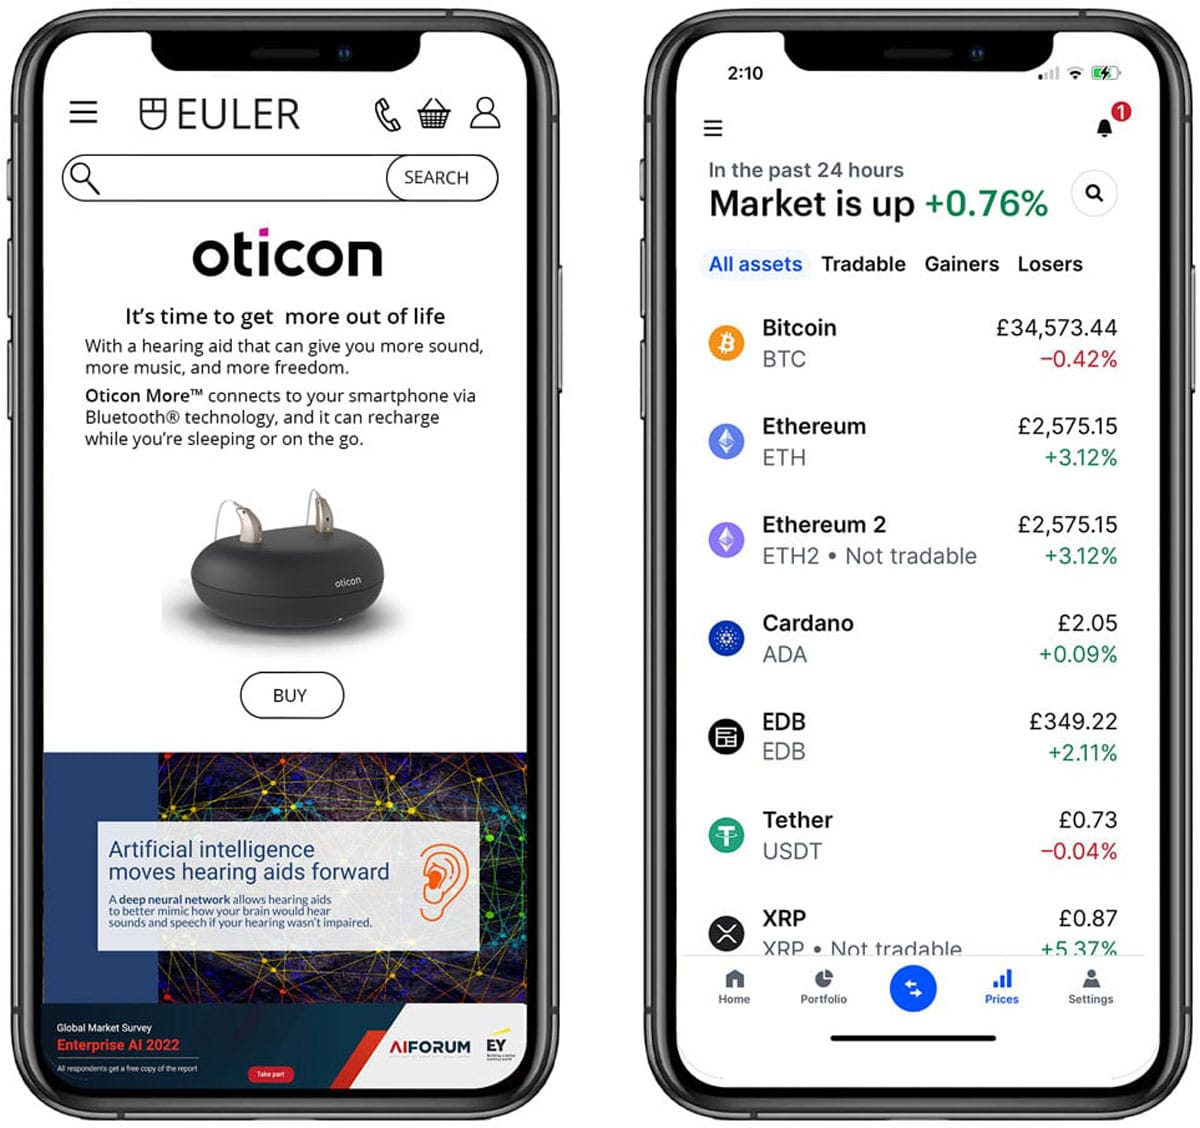 Euler Marketplace app example